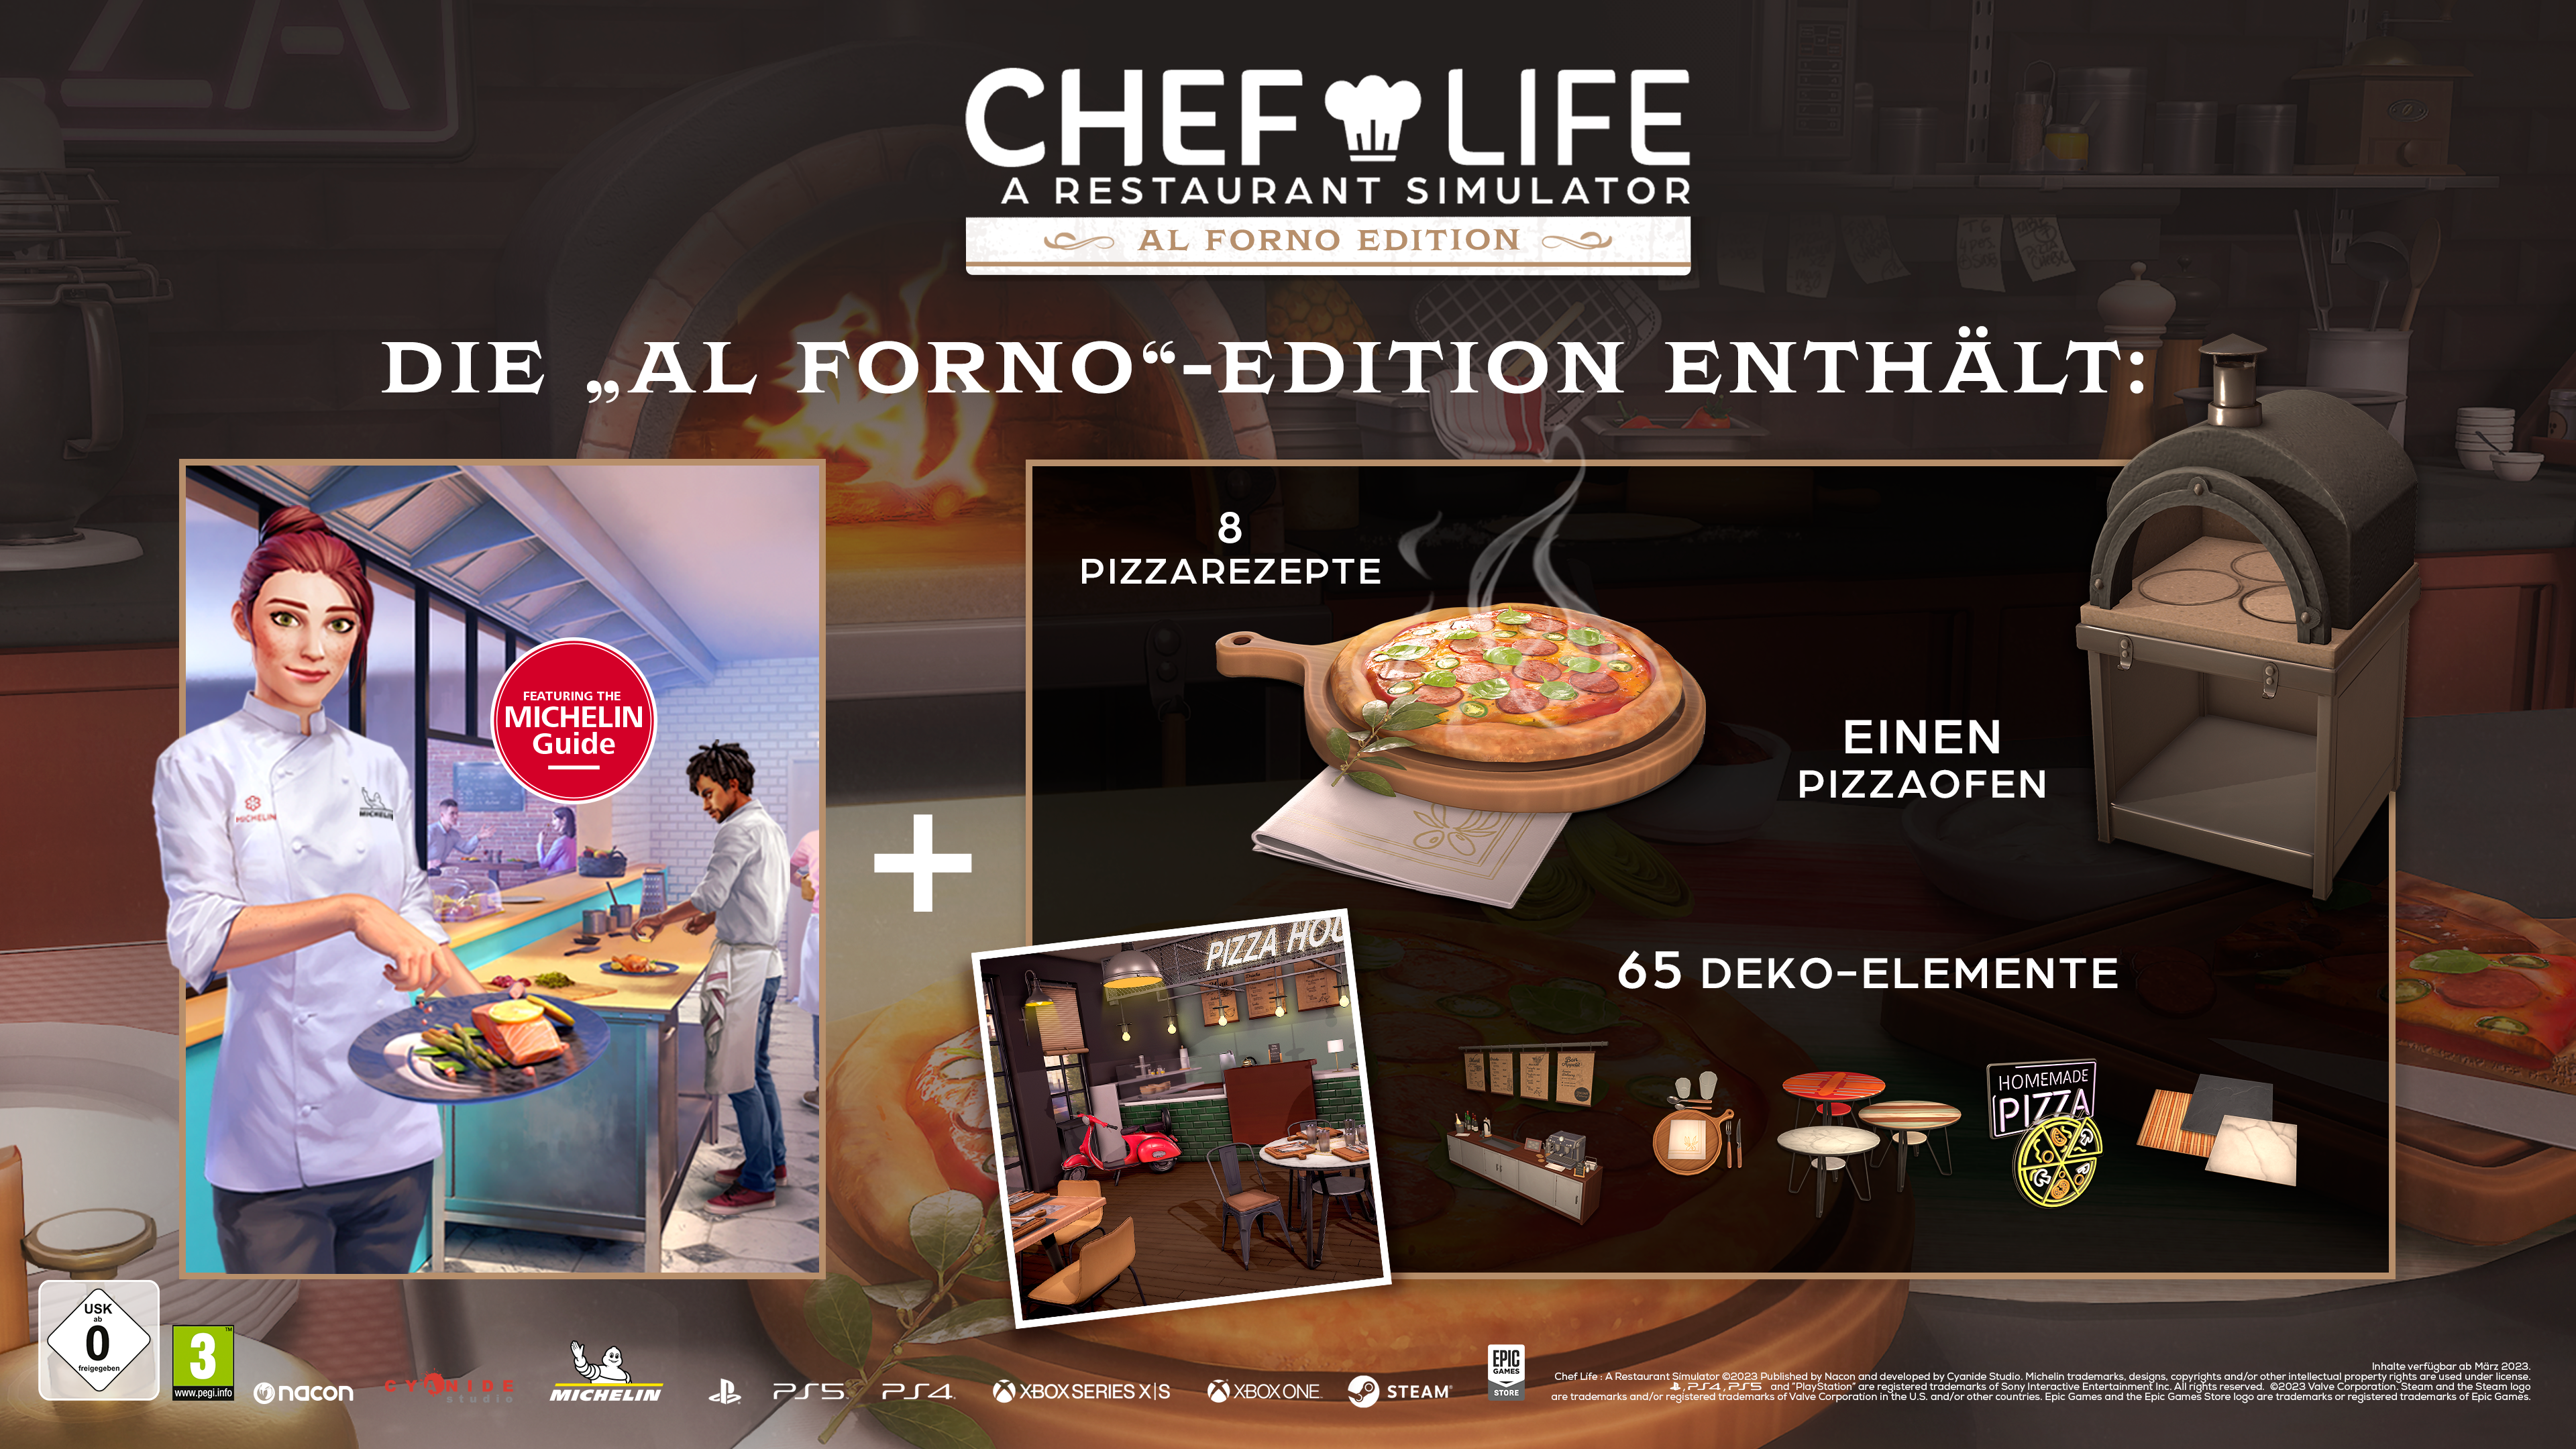 Chef Life: Edition Switch] A - Al [Nintendo Simulator - Forno Restaurant